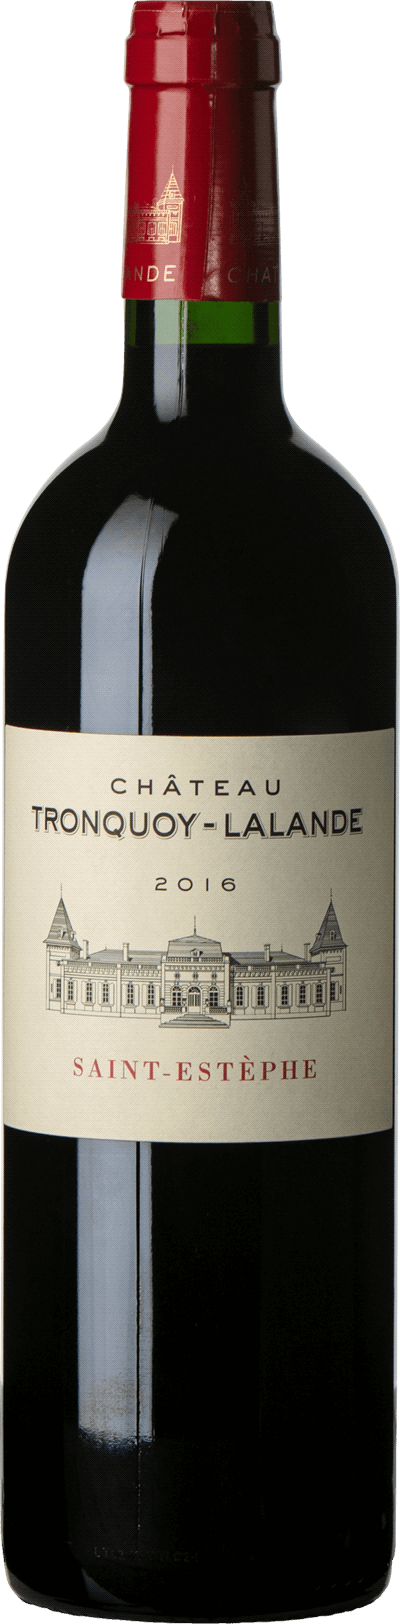 Produktbild för Chateau Tronquoy-Lalande